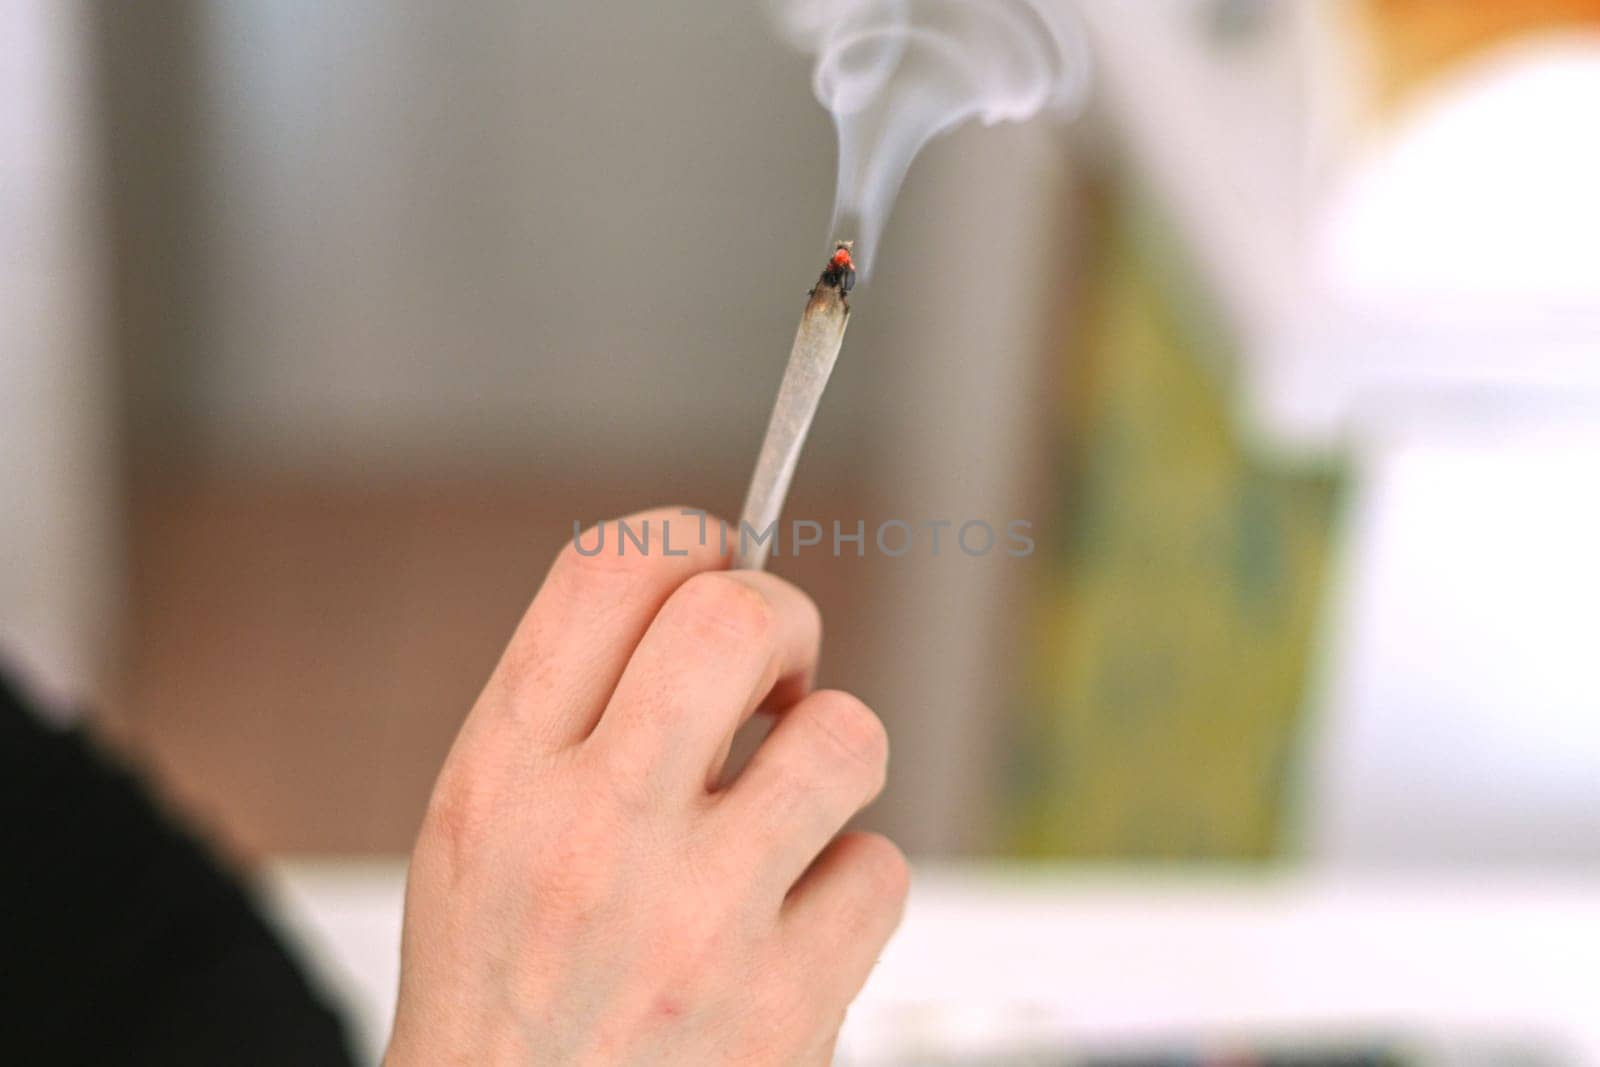 unrecognizable person prepare smoke hashish tobacco cigarette joint personal health relax use at home by verbano